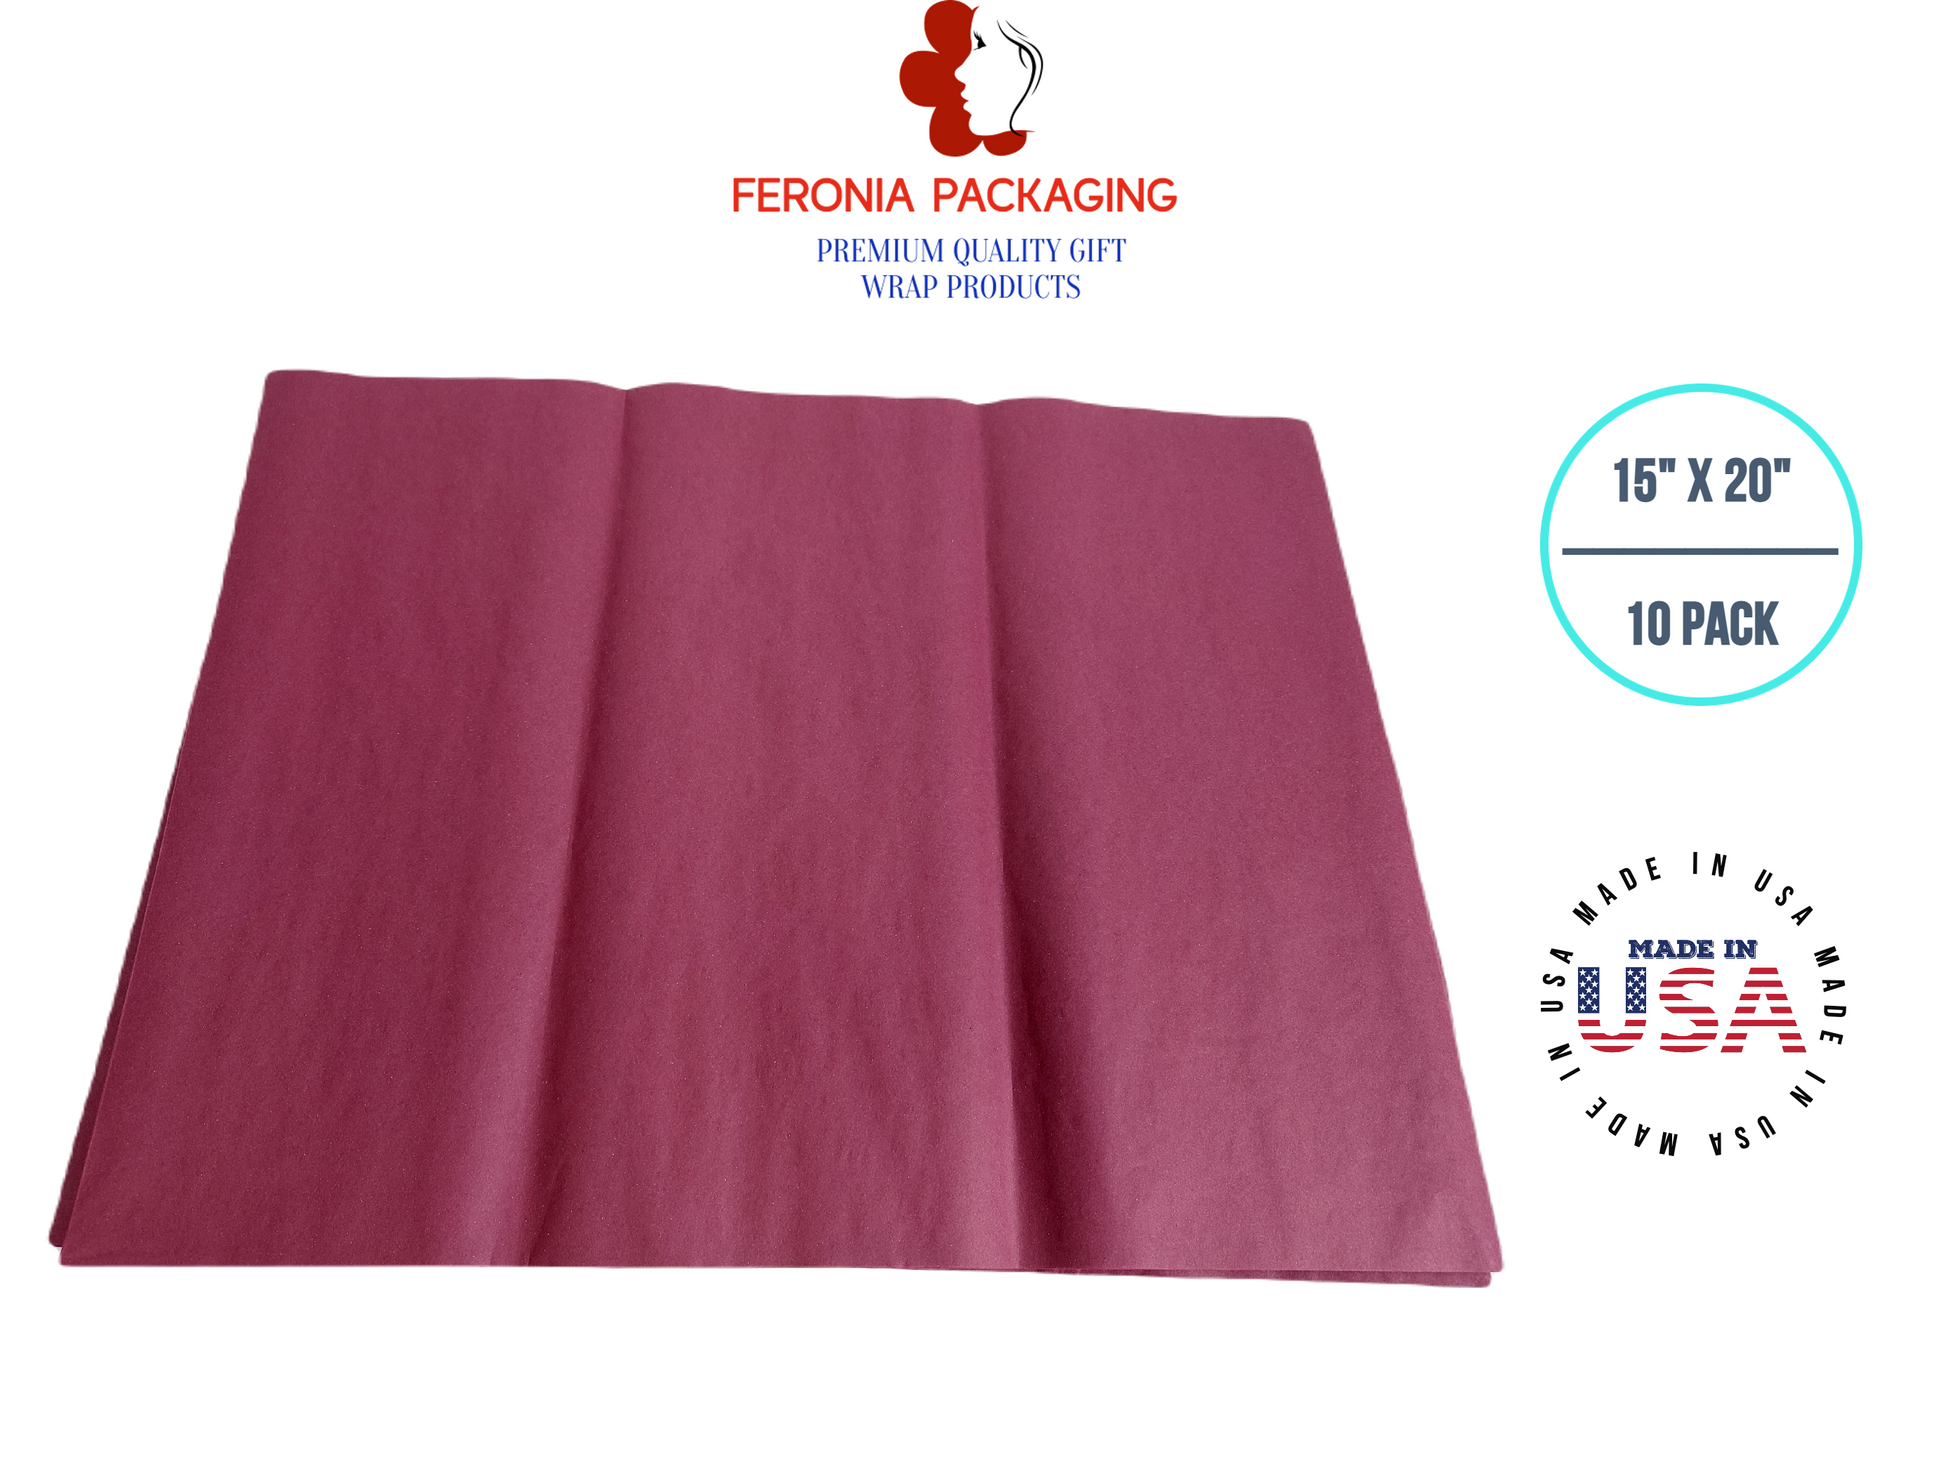 Hot Pink Tissue Paper, 15x20, 100 ct